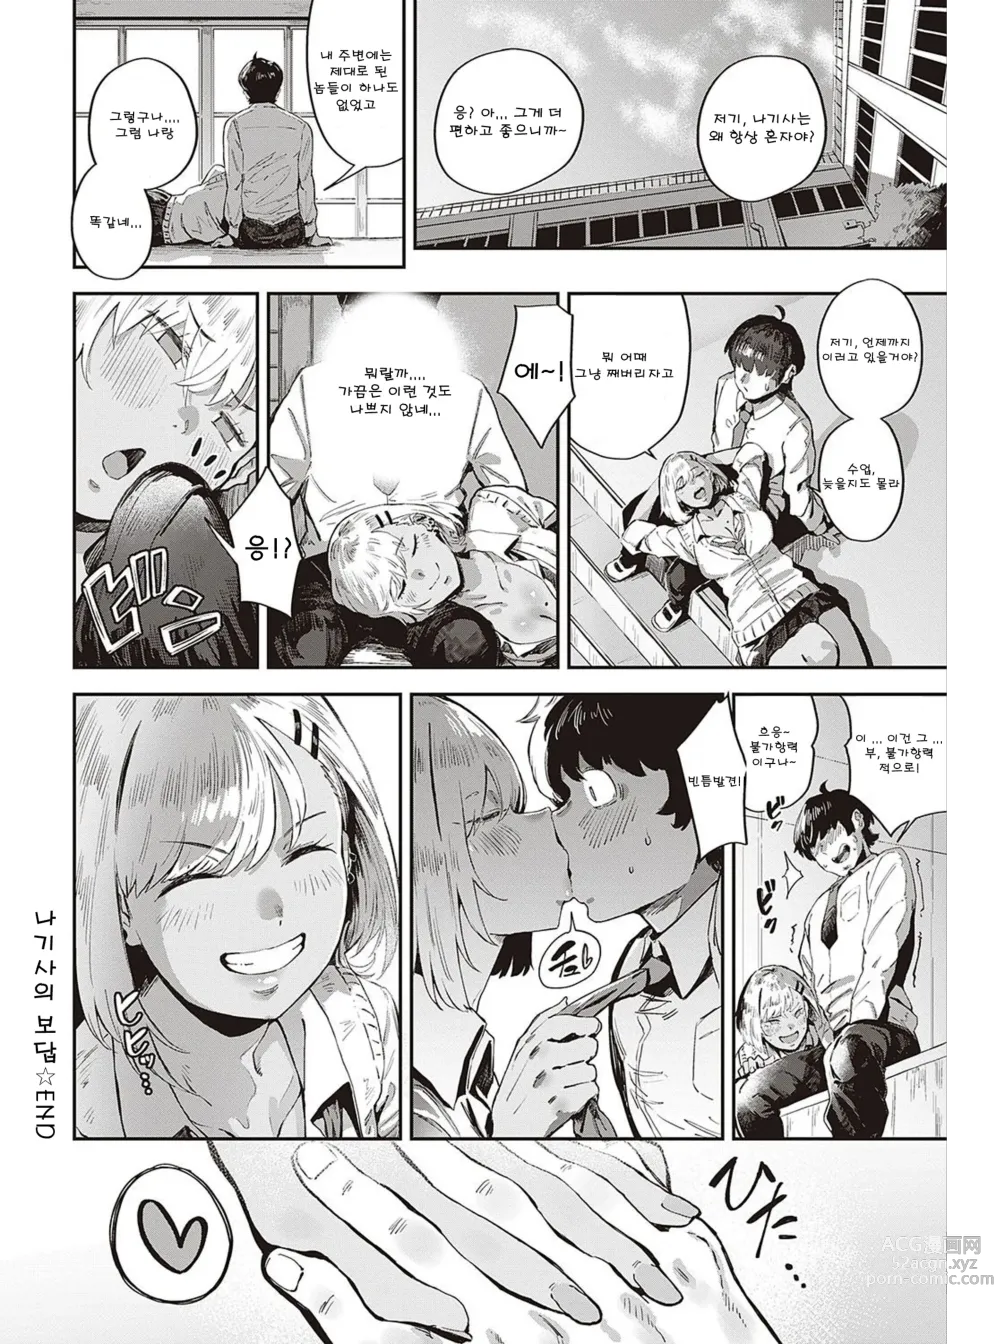 Page 20 of manga Nagisa no in-gaeshi